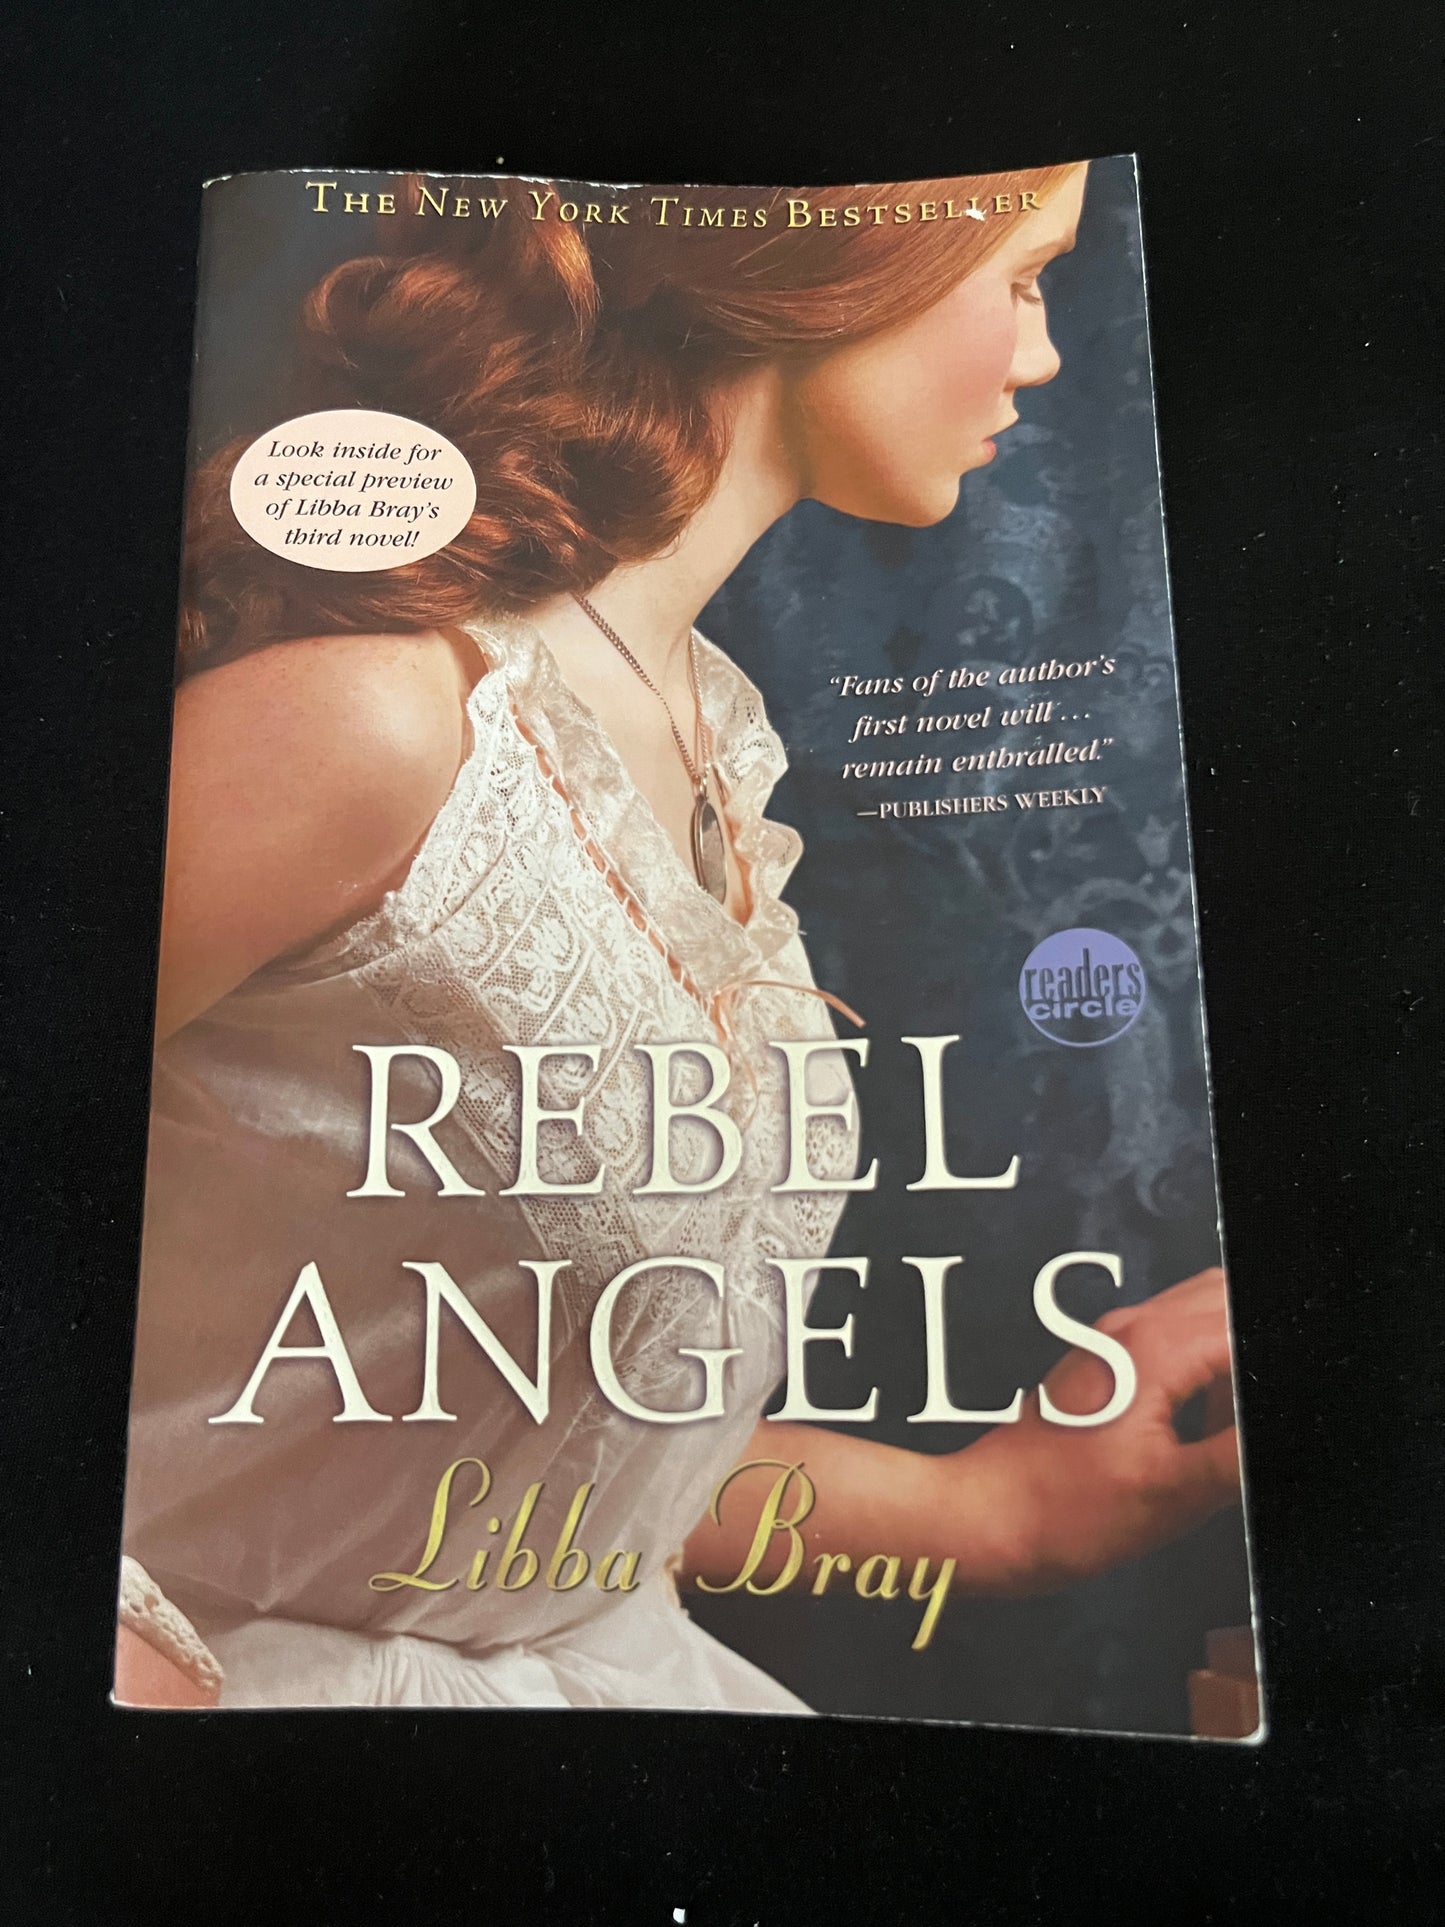 REBEL ANGEL by Libba Bray